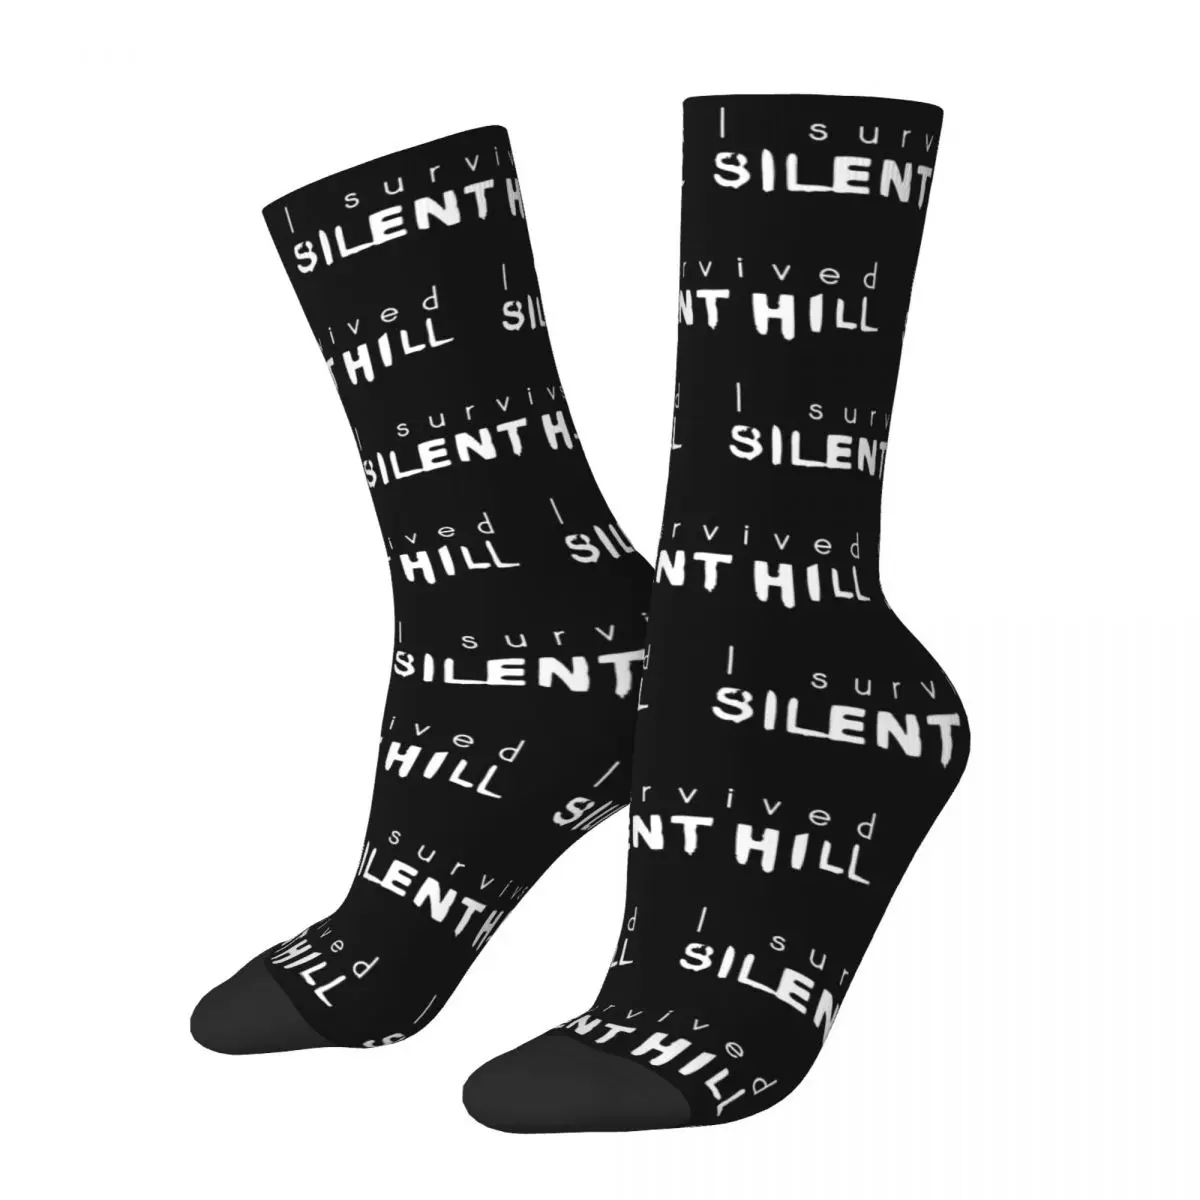 

Happy Funny Men's Socks Harajuku I Survived Silent Hill Sock Graphic Women Socks Spring Summer Autumn Winter